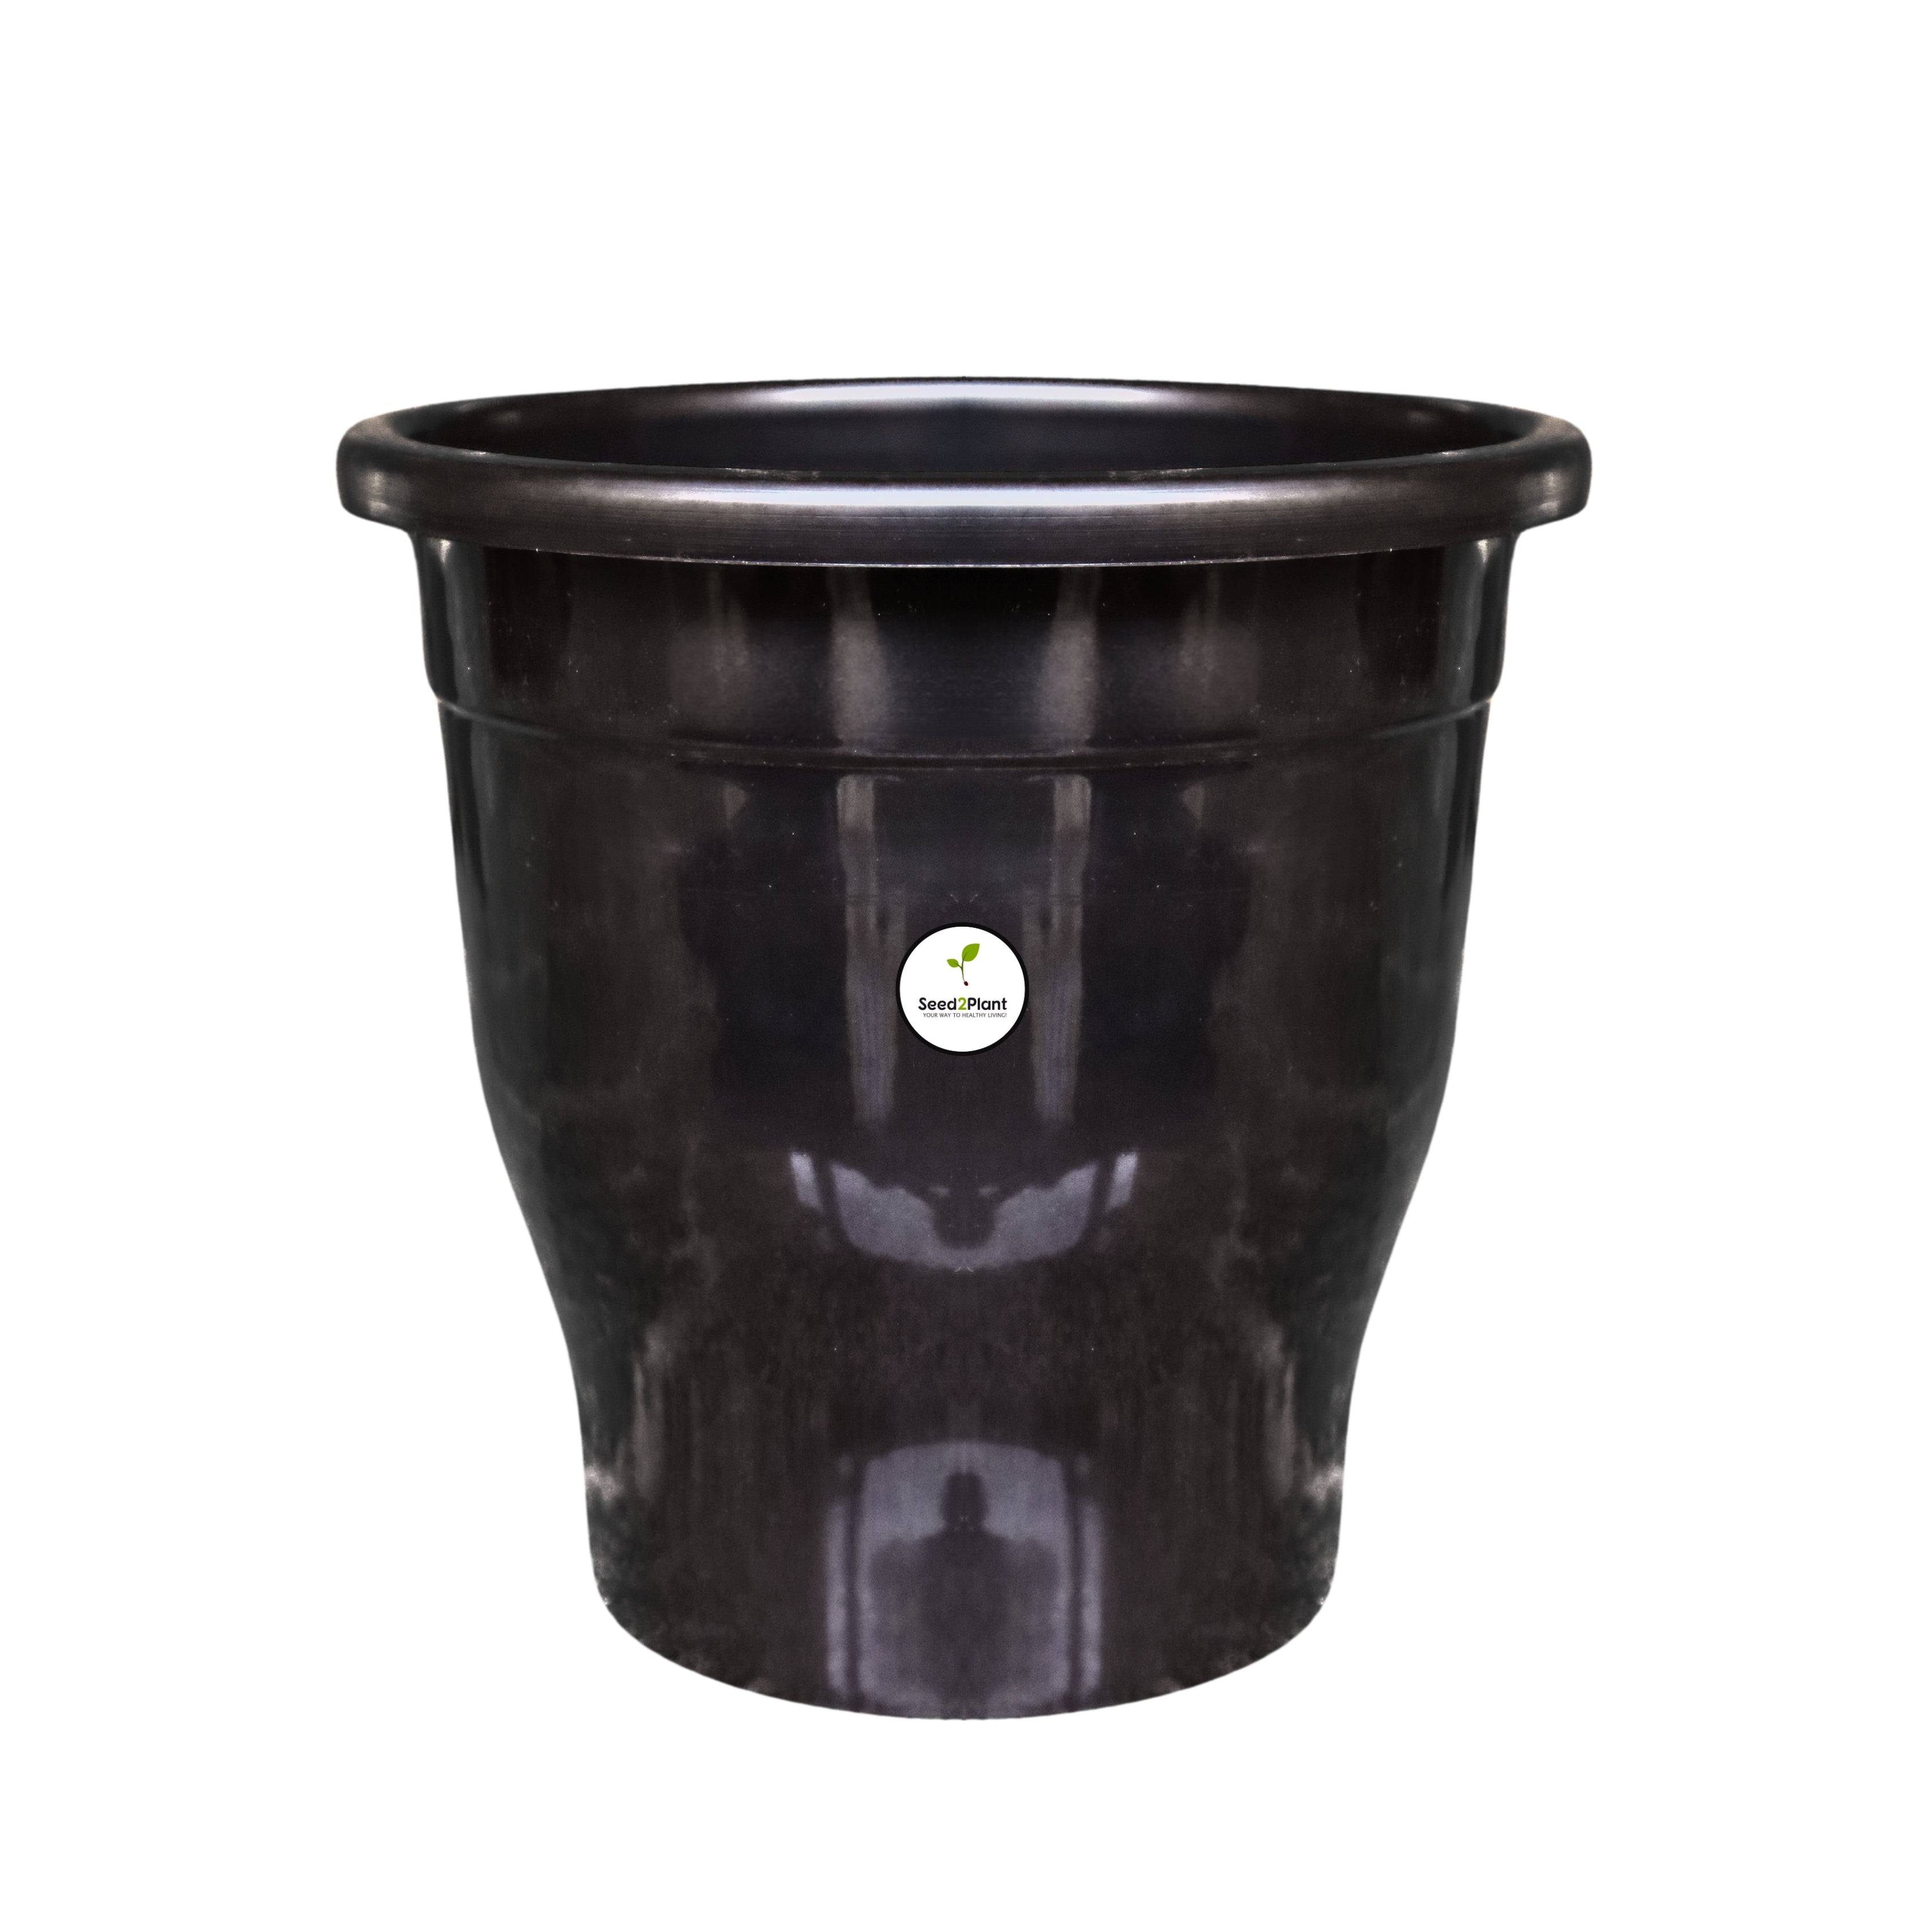 Glossy Black Plastic Pot / Planter